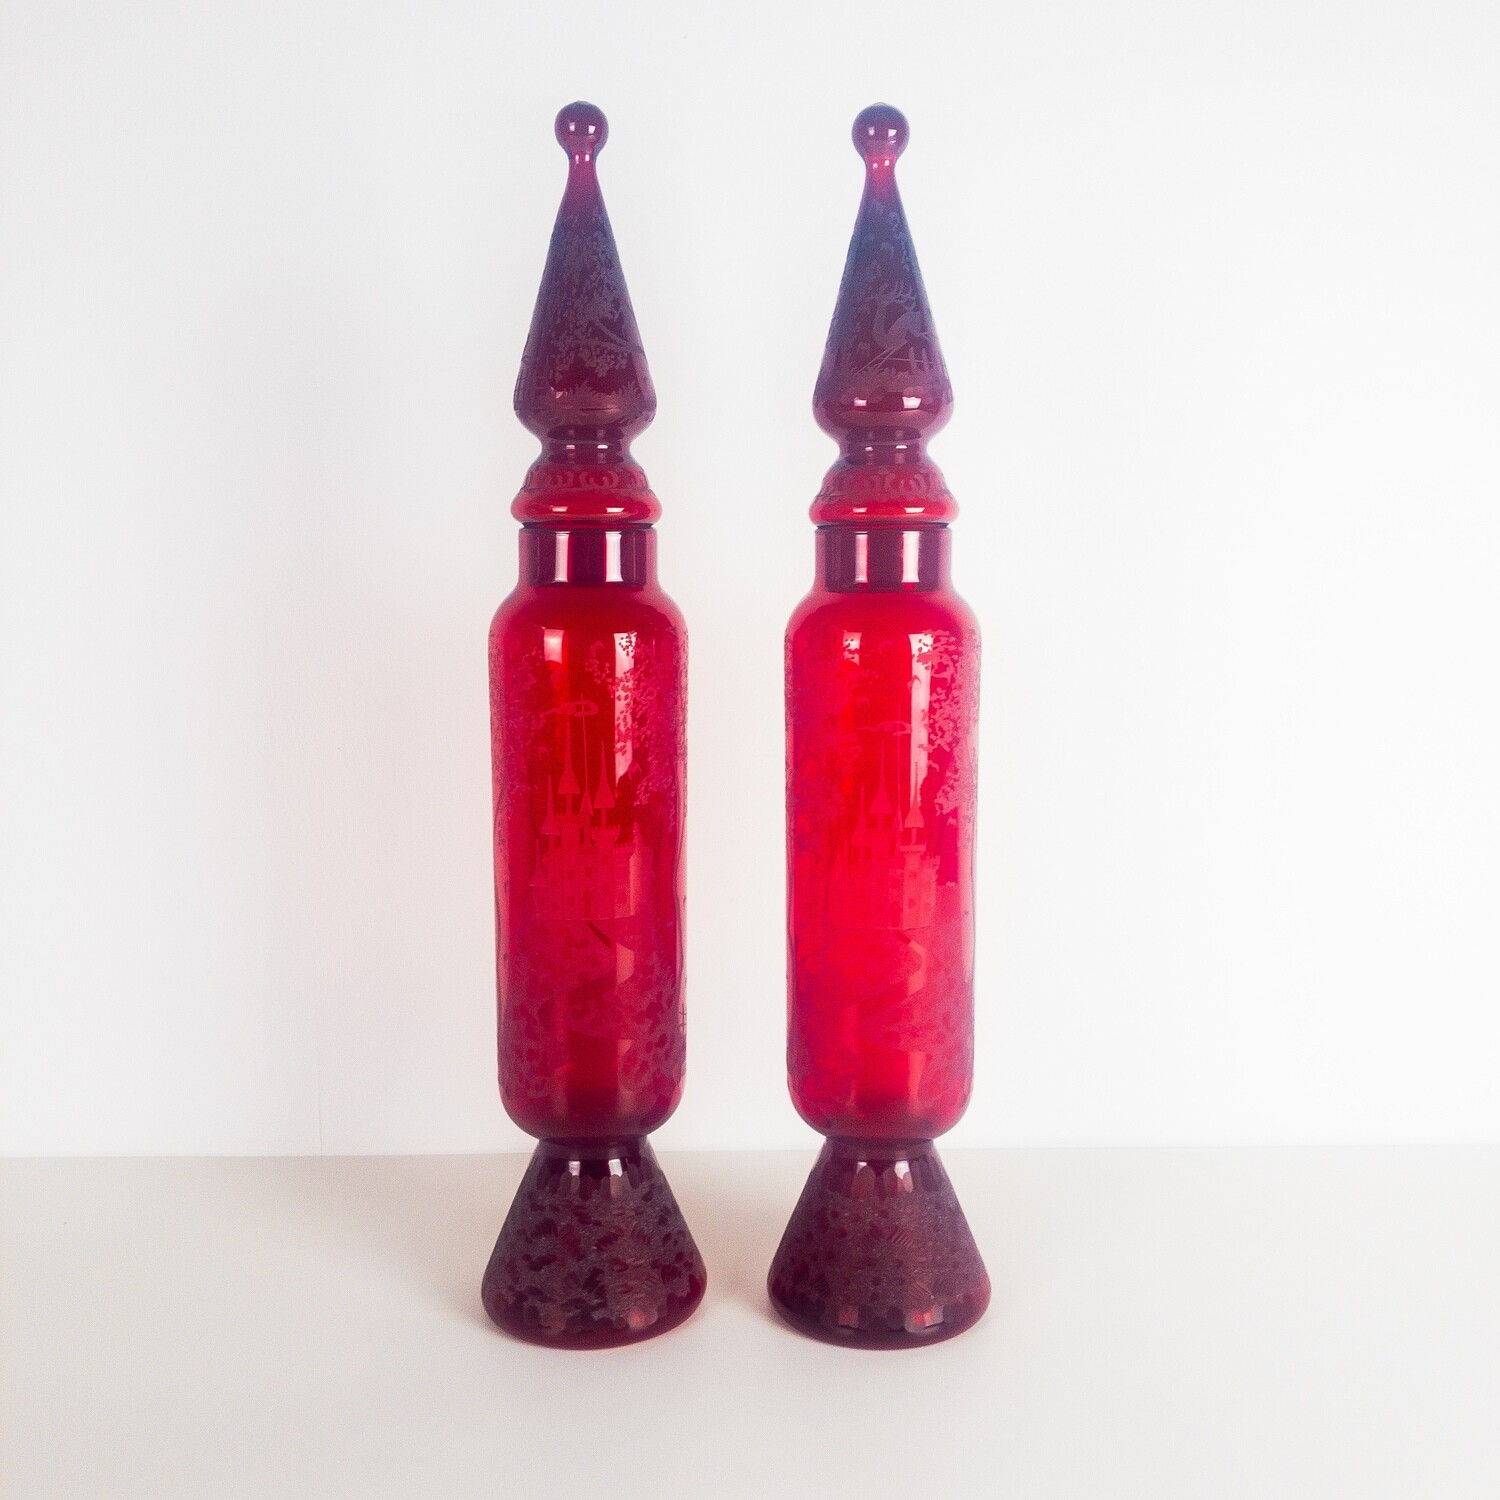 Pair of engraved glass bottles, 1960s